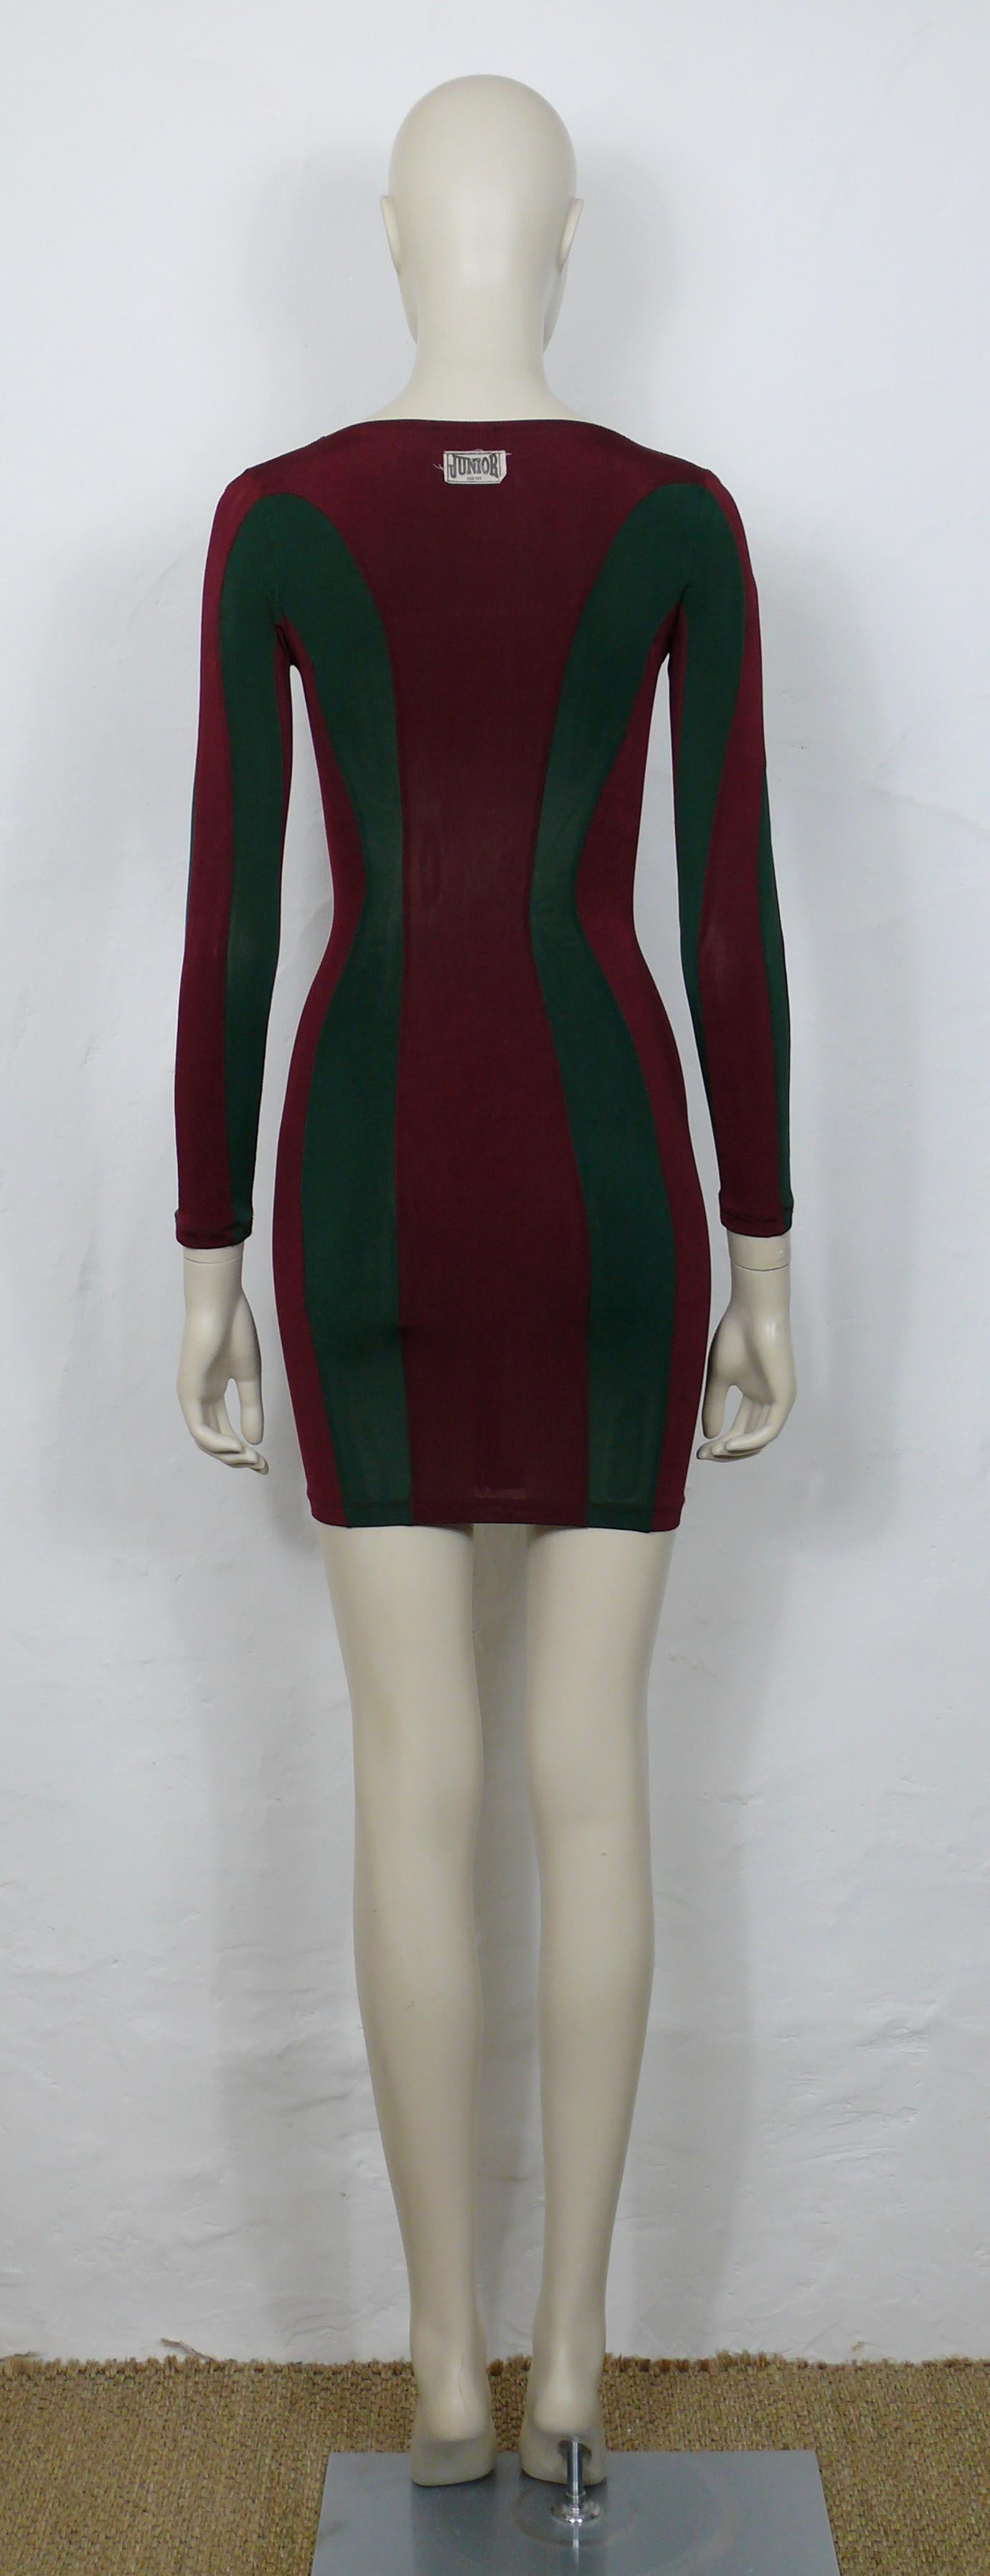 JEAN PAUL GAULTIER JUNIOR Vintage Green/Burgundy Red Color Block Bodycon Dress For Sale 3